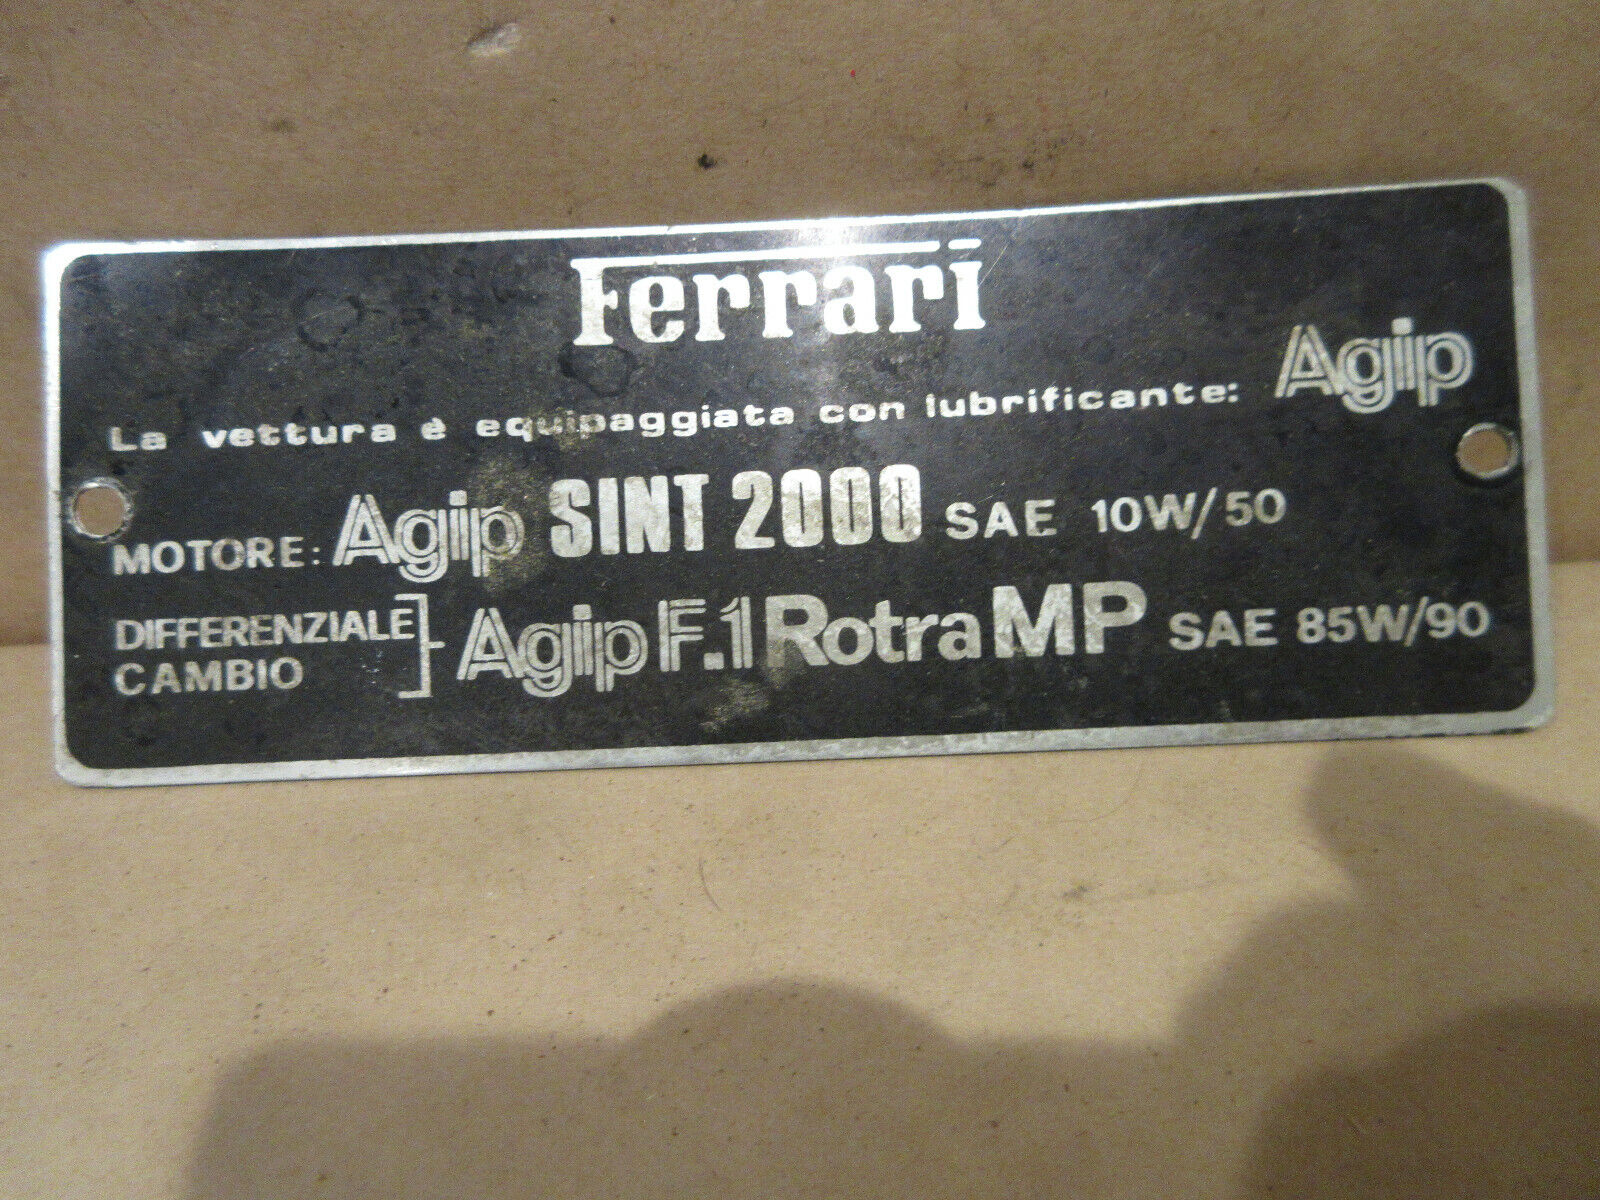 Ferrari 308 GTS - Oil / Lubrication Information Plate